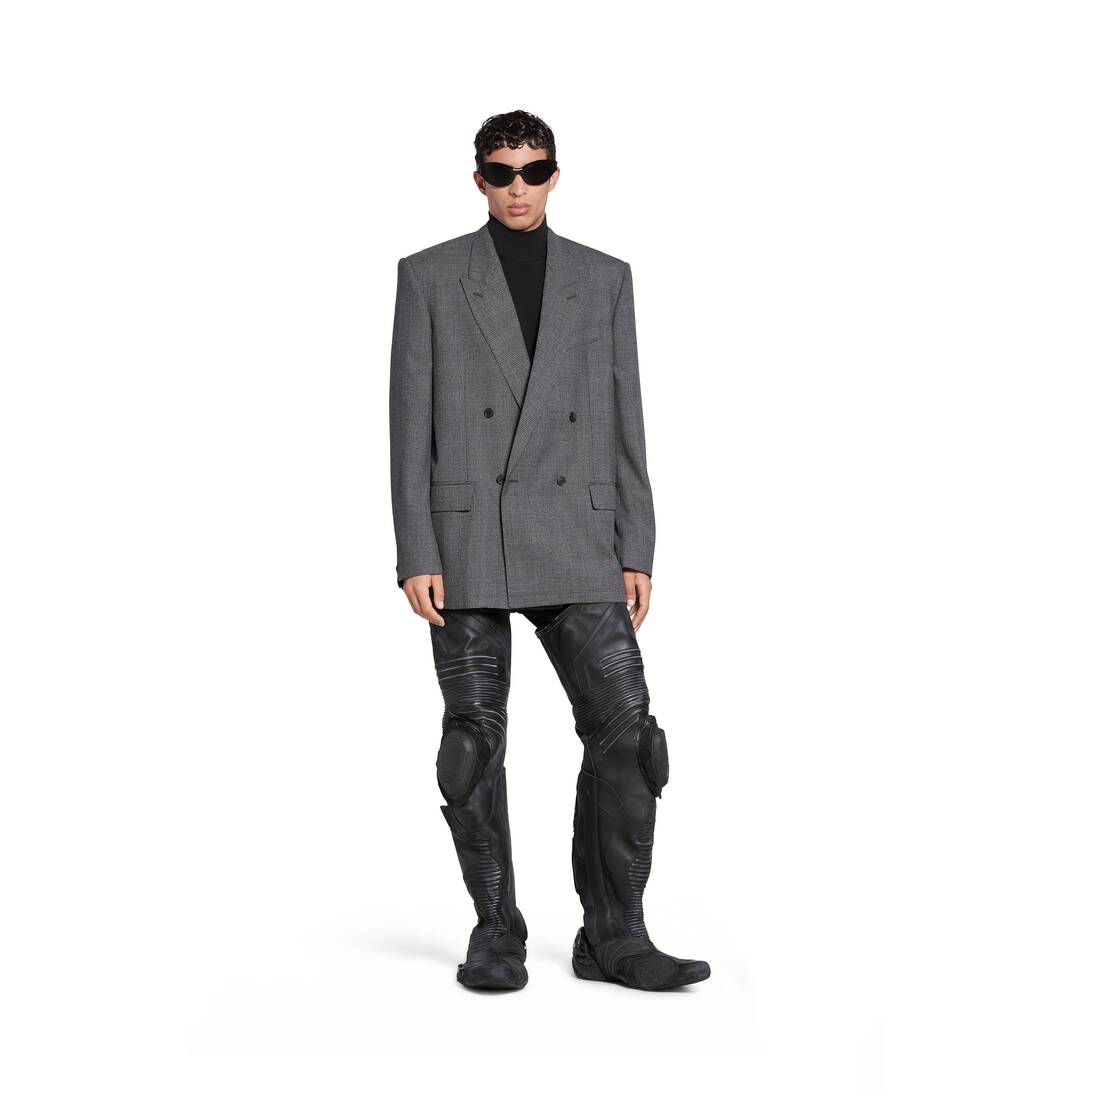 Regular Fit Jacket in Black/grey